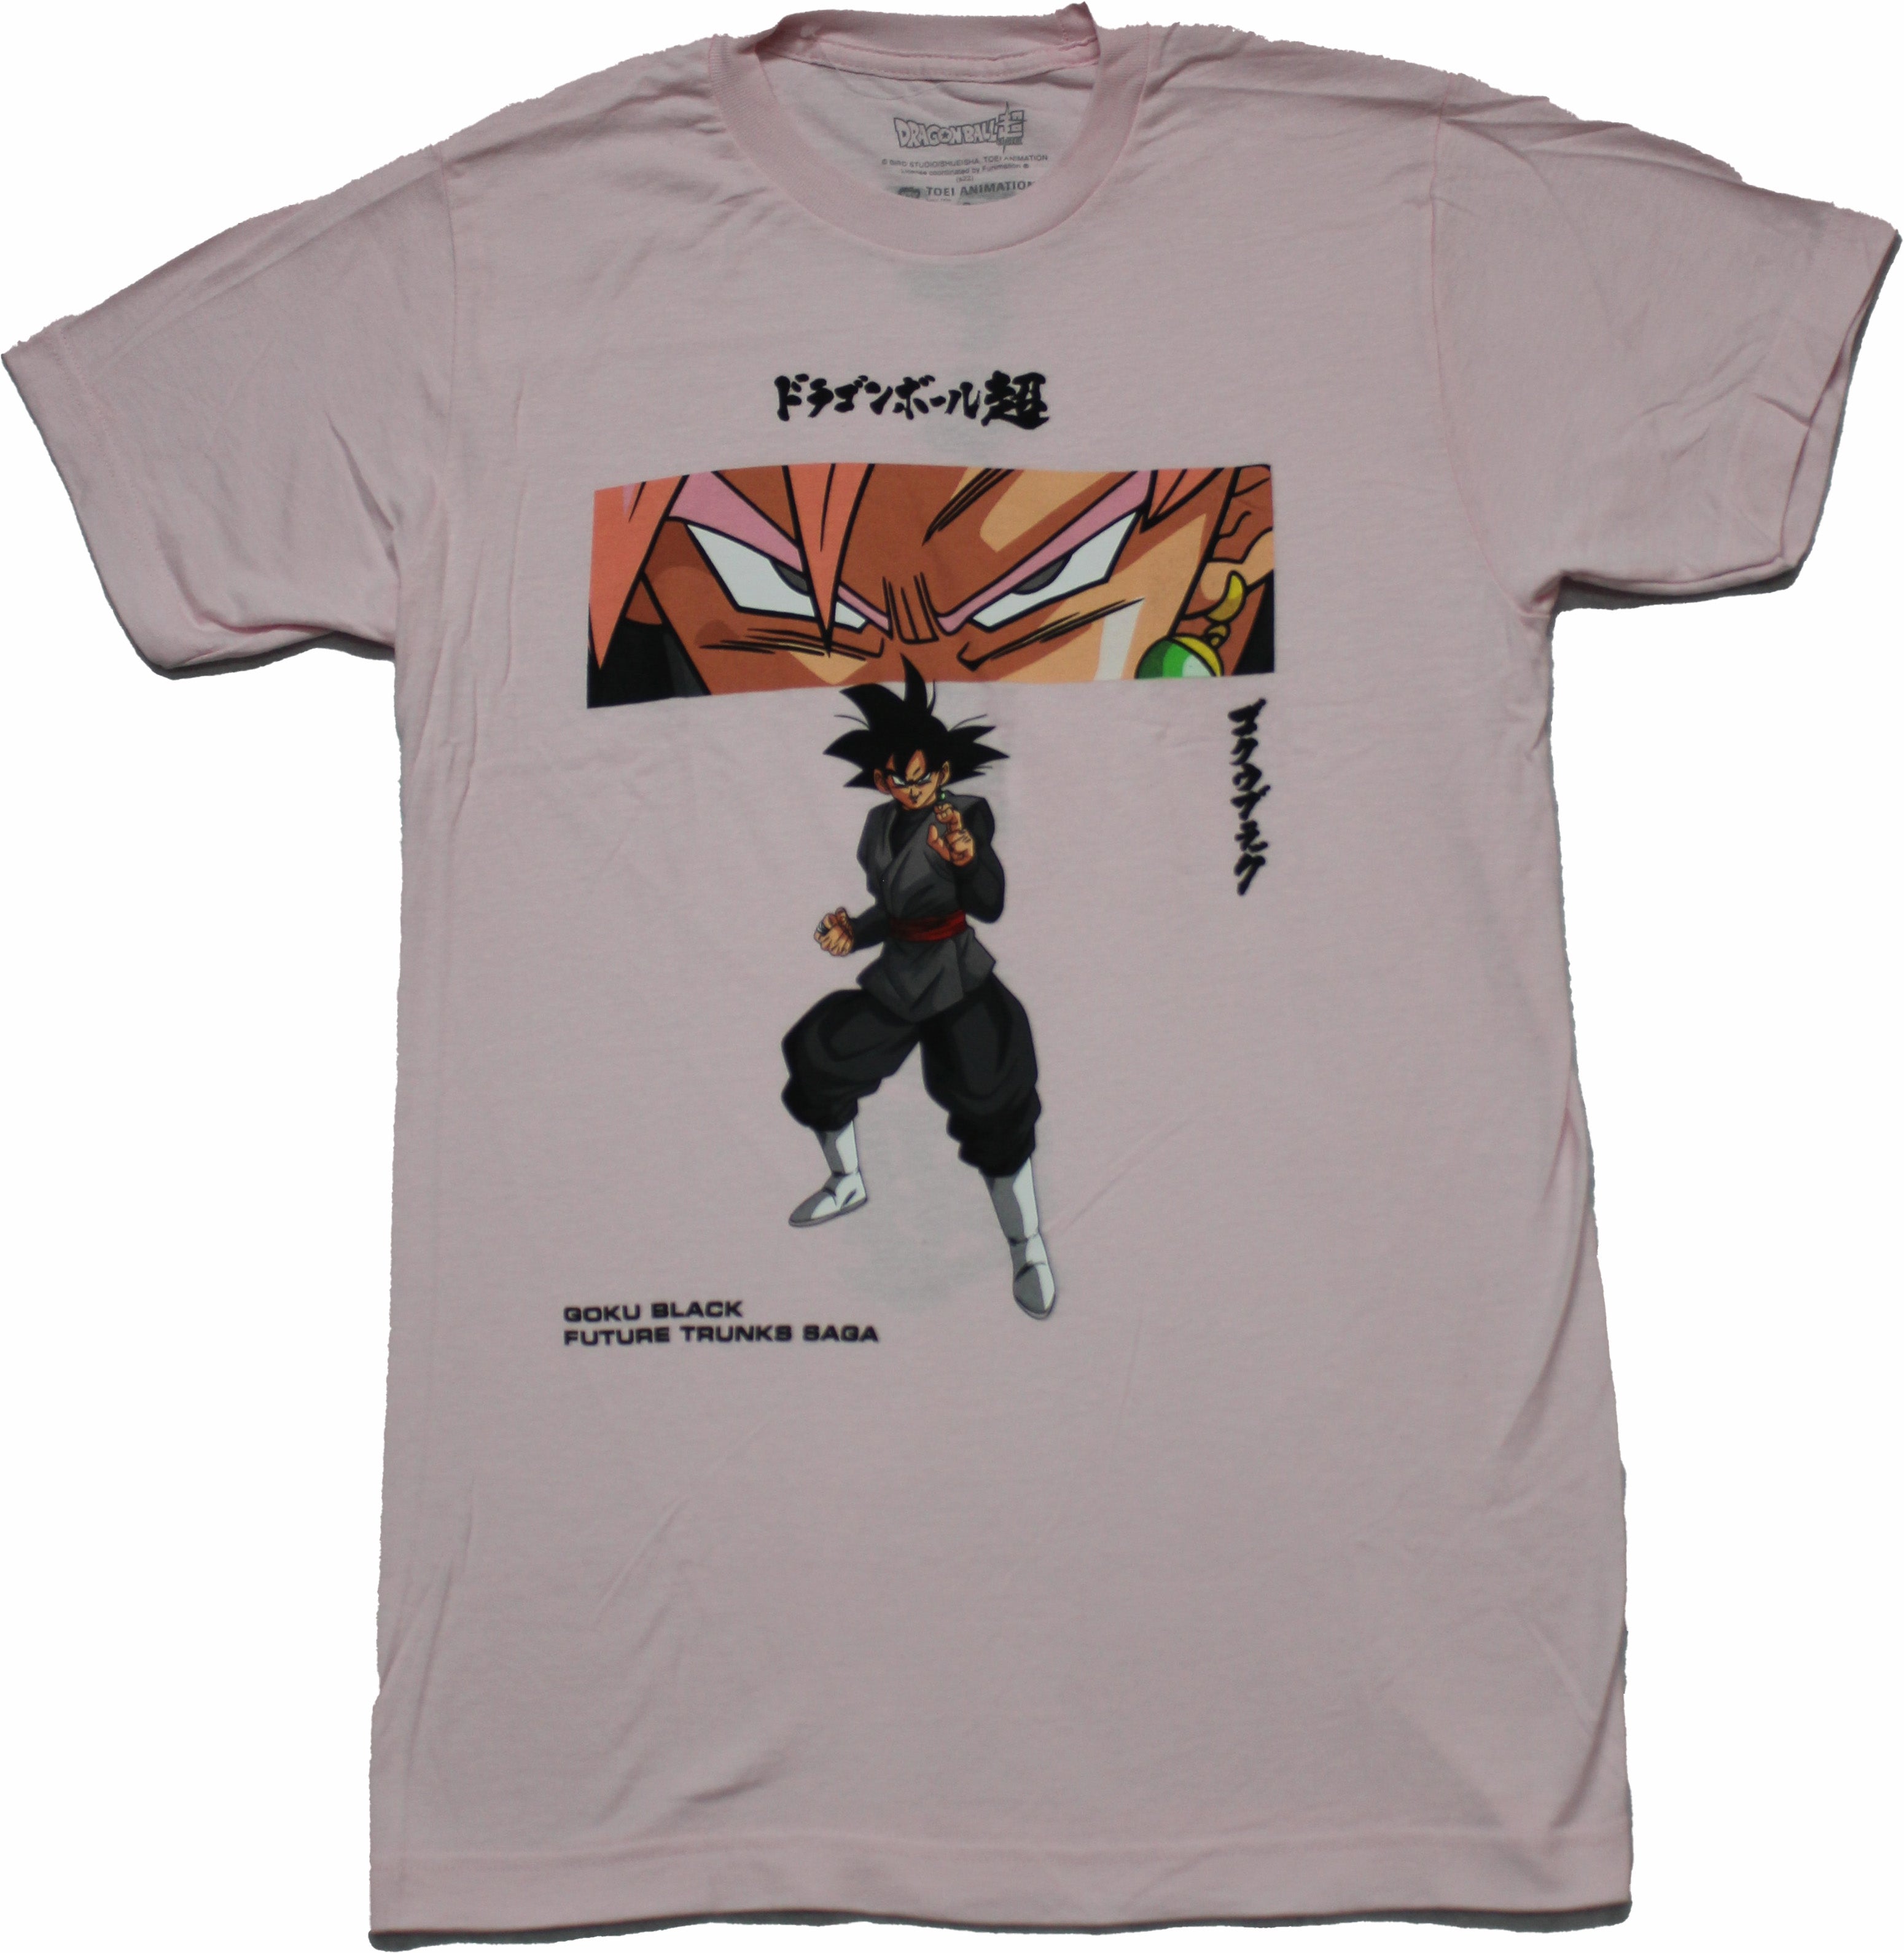 Dragon Ball Z Mens T-Shirt - Goku Black Eyes Trunks Saga Stance